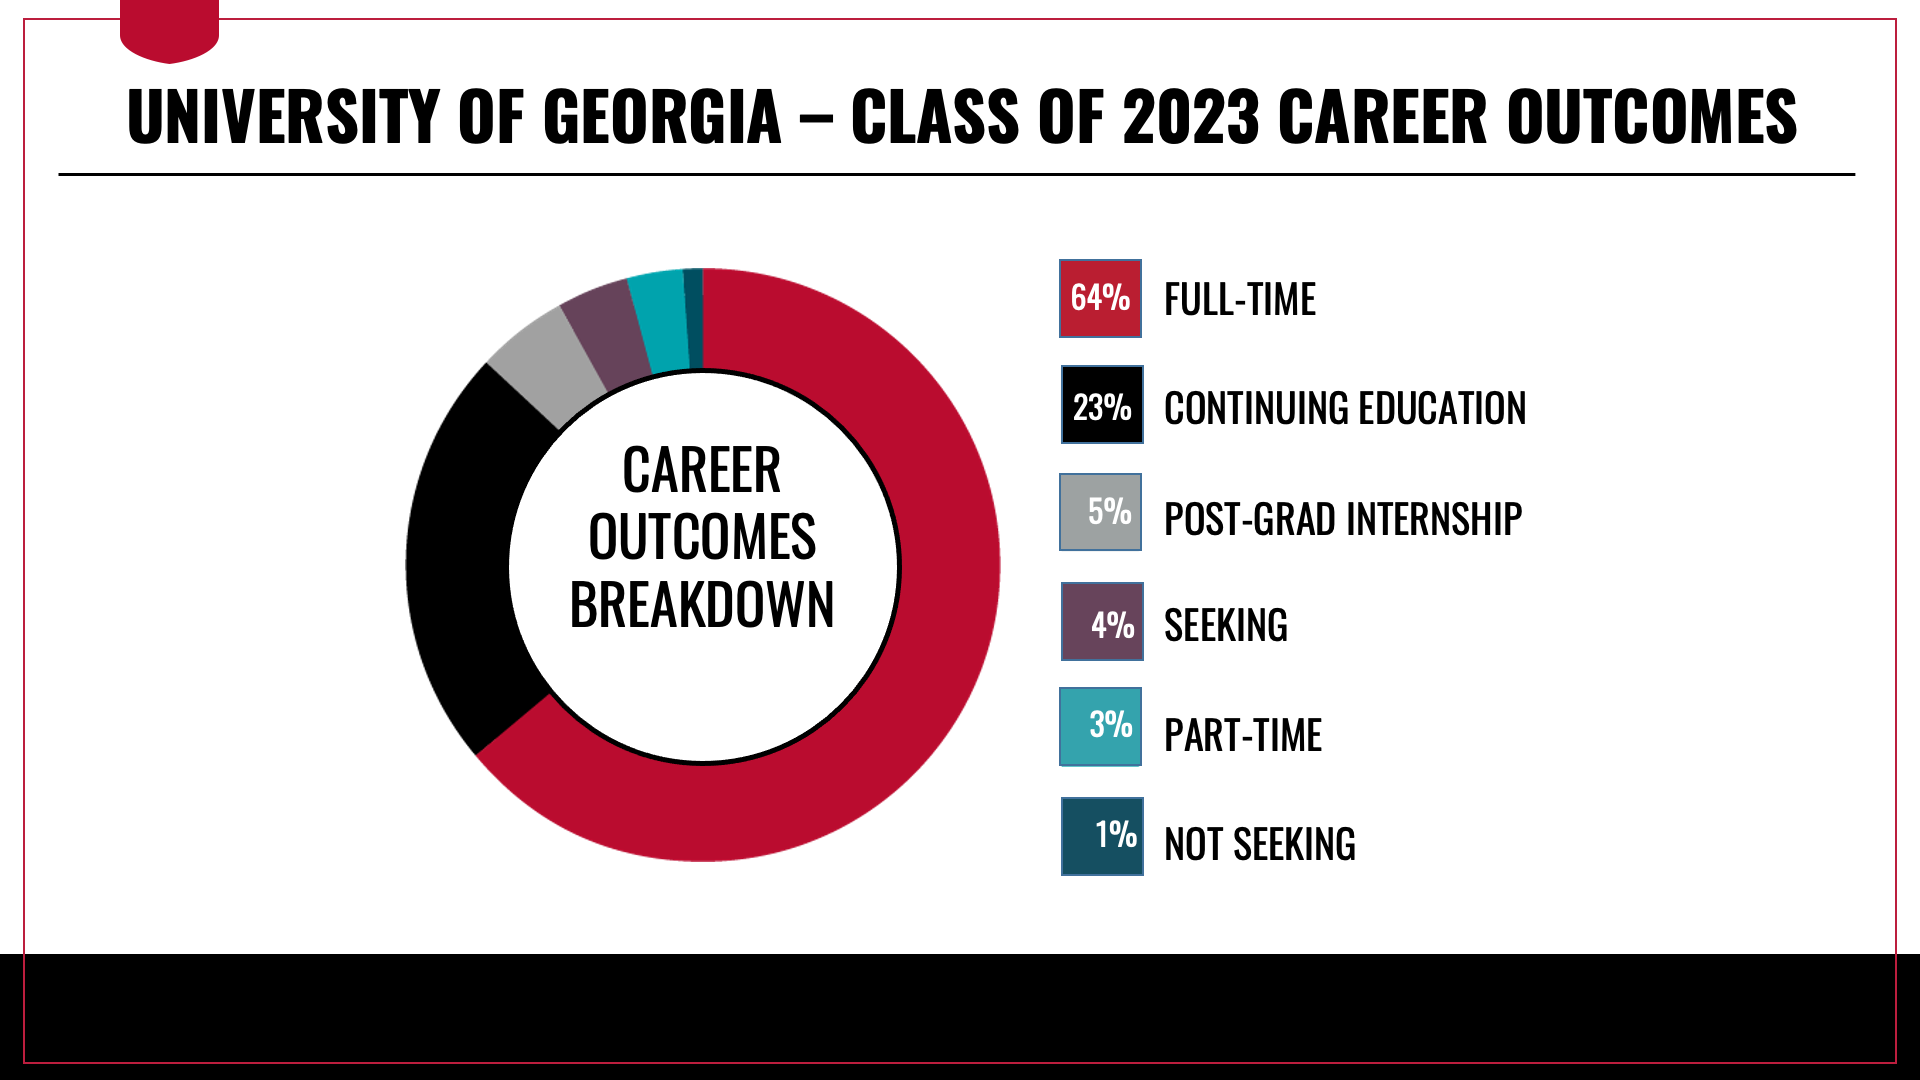 UGA Class of 2023 Career Outcomes Breakdown - 64 percent employed full-time, 23 percent continuing education, 5 percent post graduation internship, 4 percent still seeking, 3 percent employed part-time, and 1 percent not seeking